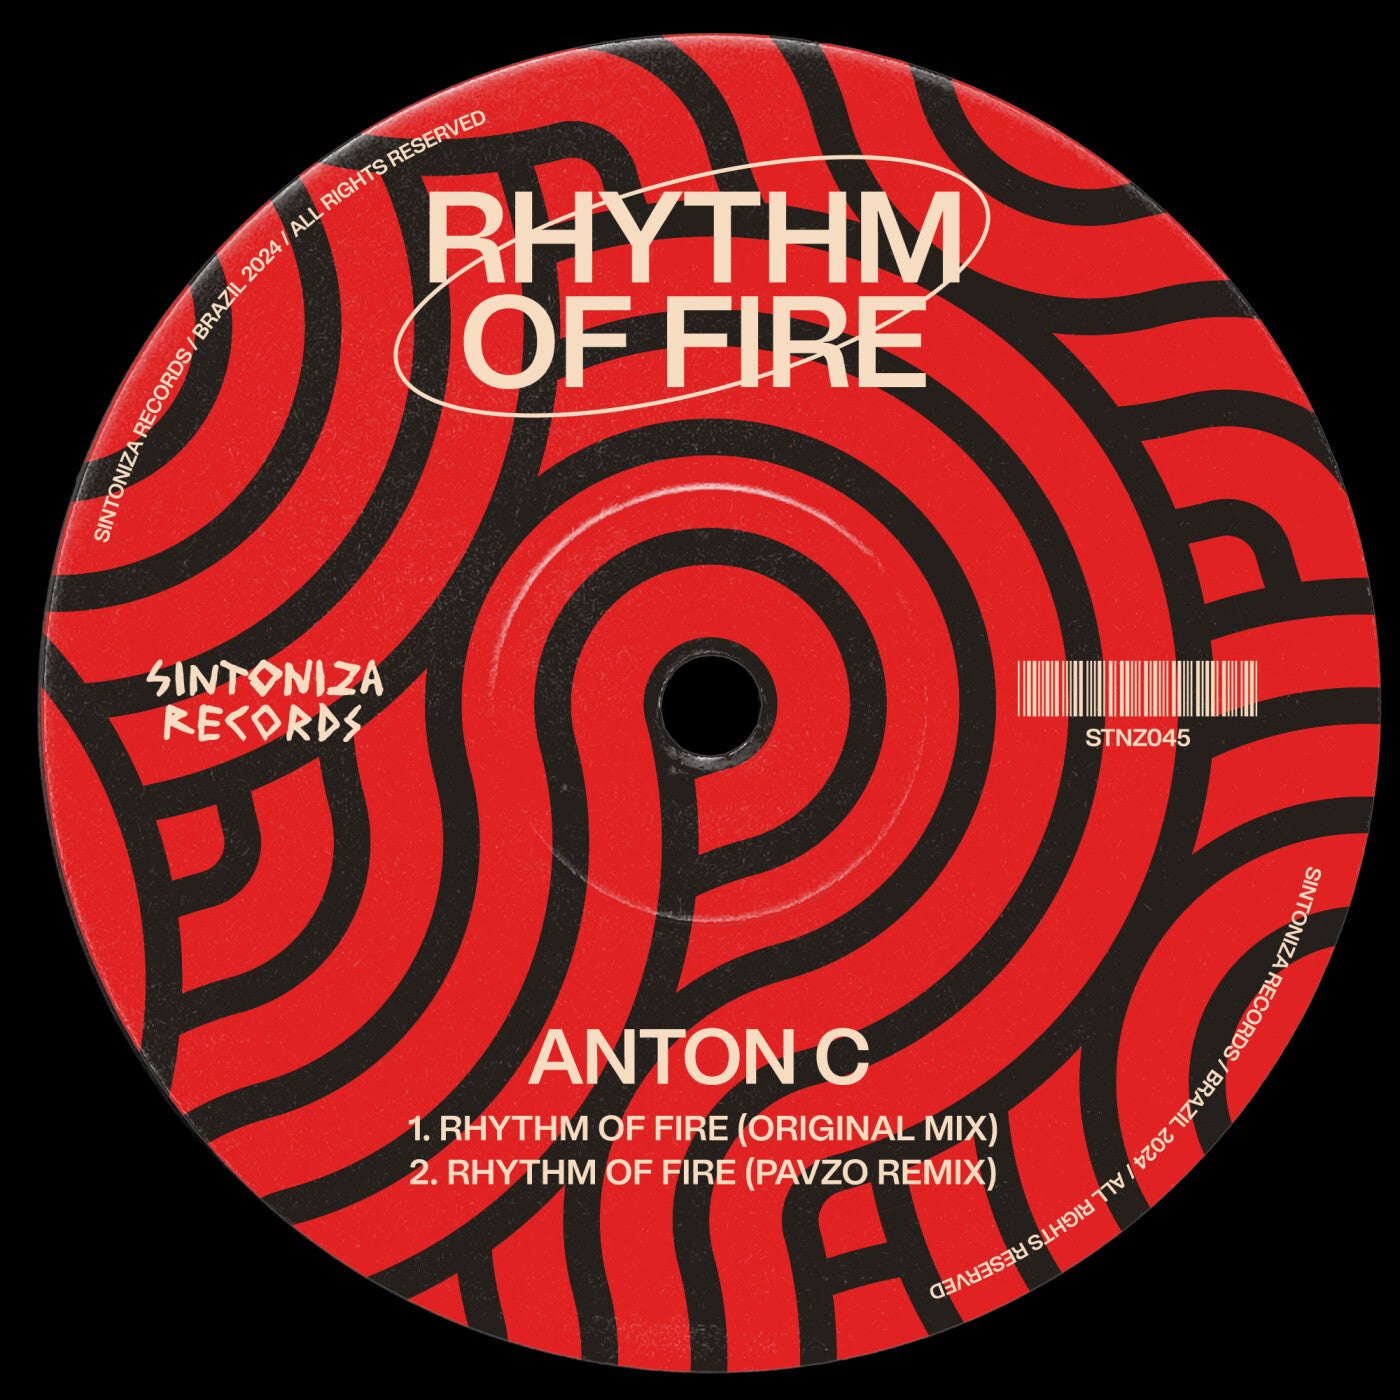 Anton C – Rhythm Of Fire on Sintoniza Records